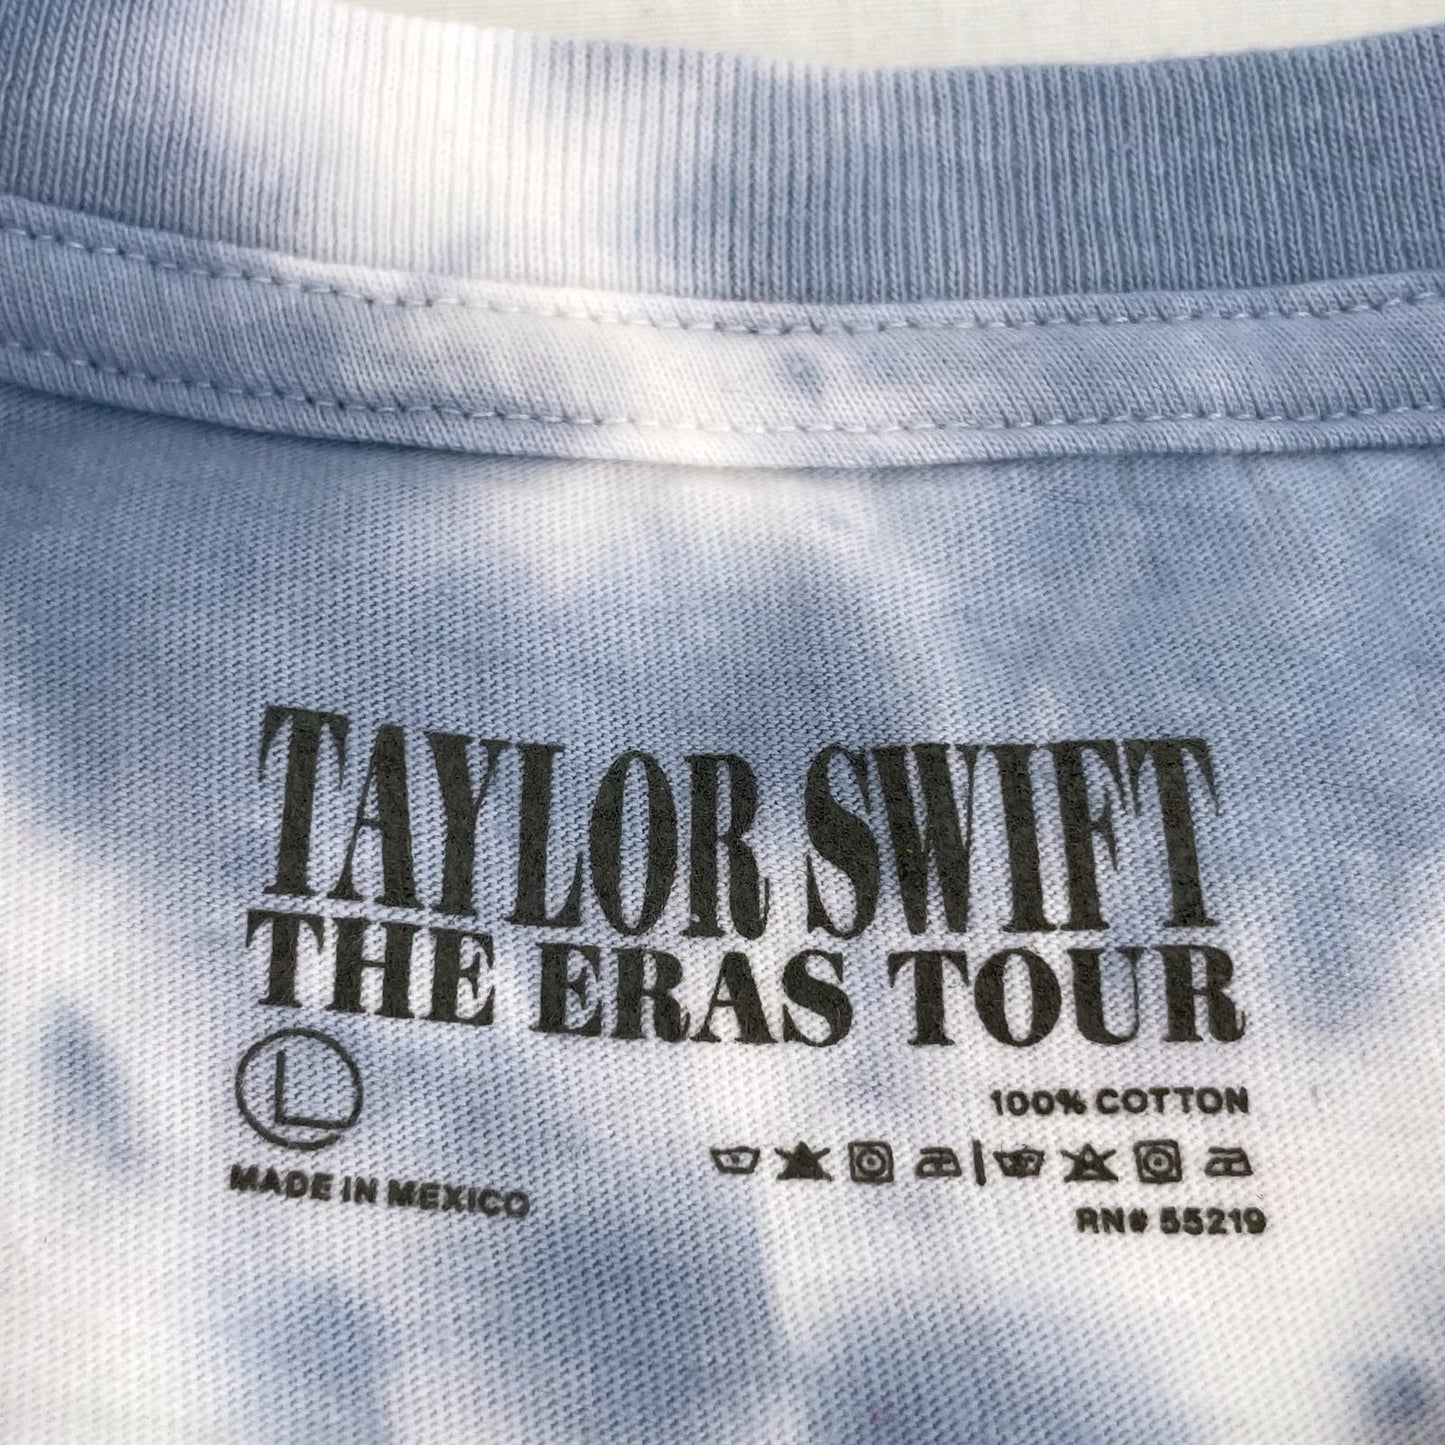 Taylor Swift Eras Tour Tie Dye Tank Top Muscle Tee Stadium Exclusive Merch Size L